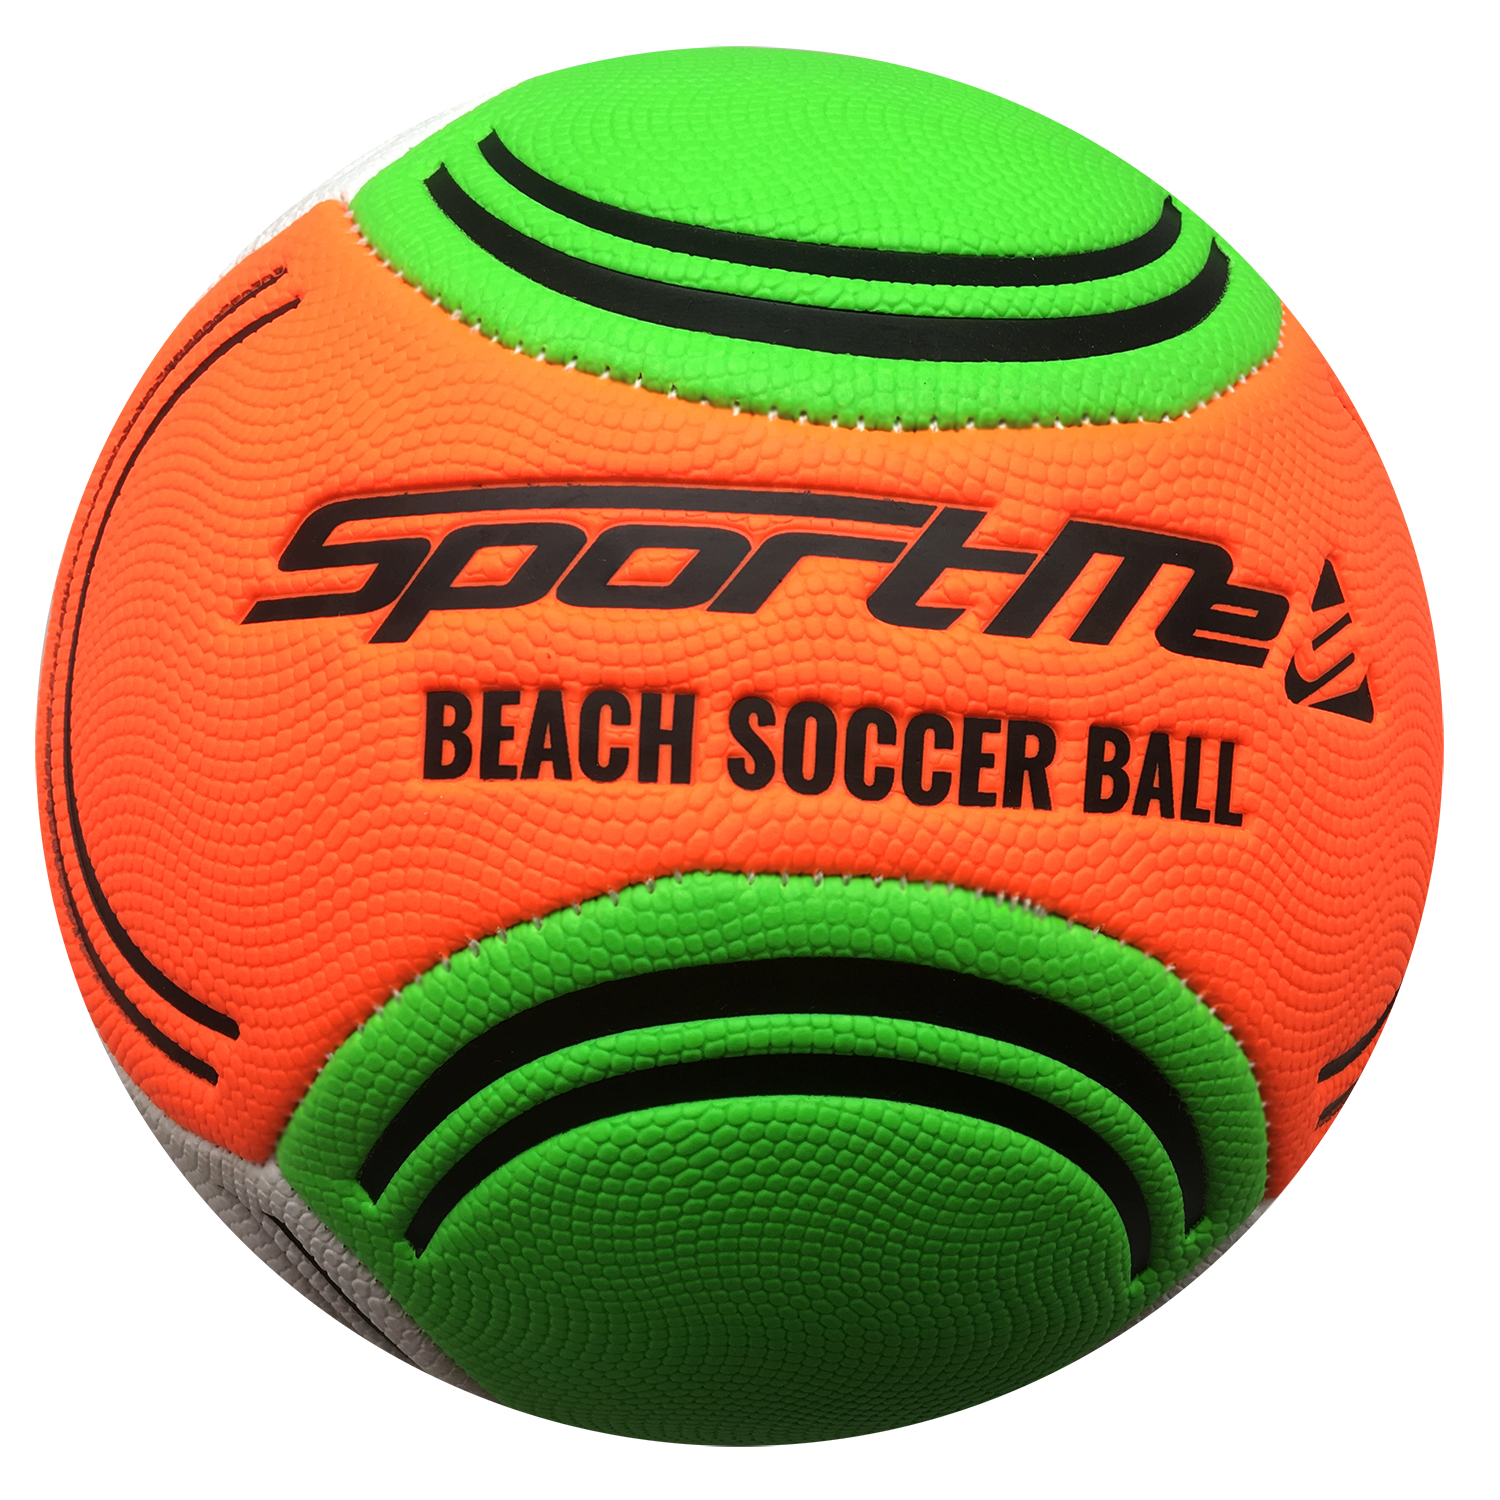 Beachfotboll Official, Grön-Orange-Vit